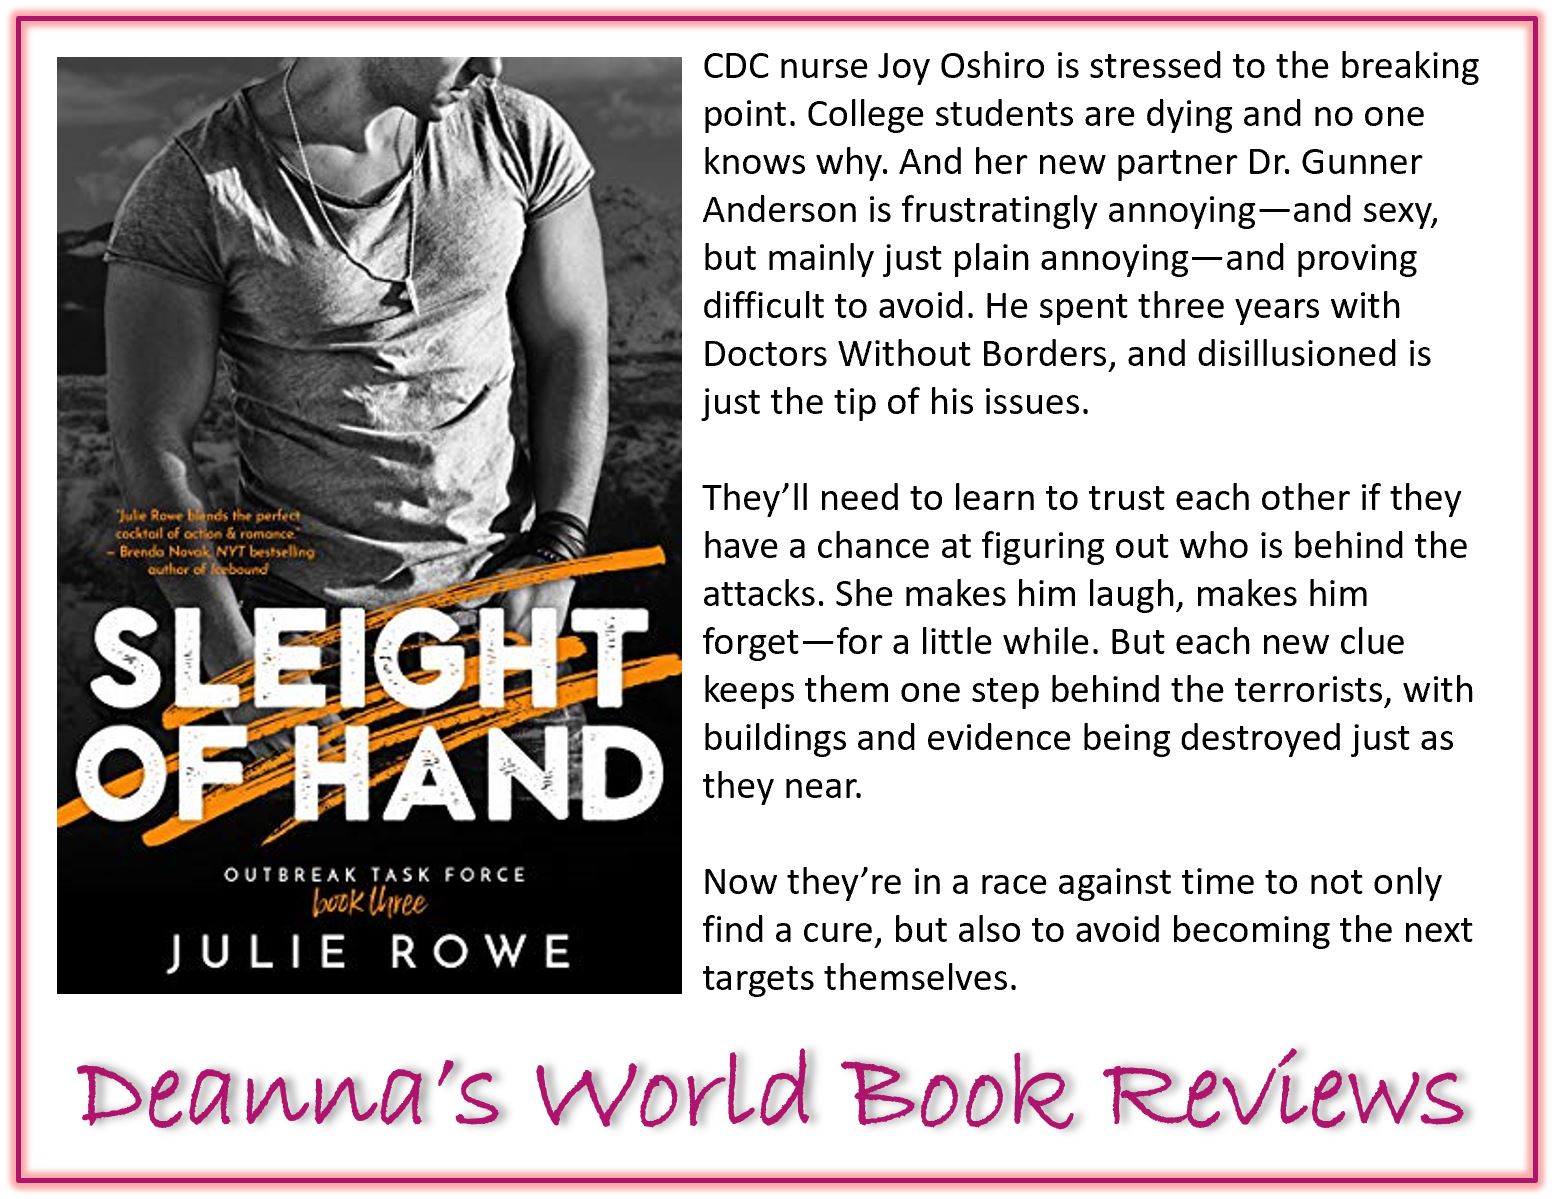 Sleight of Hand by Julie Rowe blurb